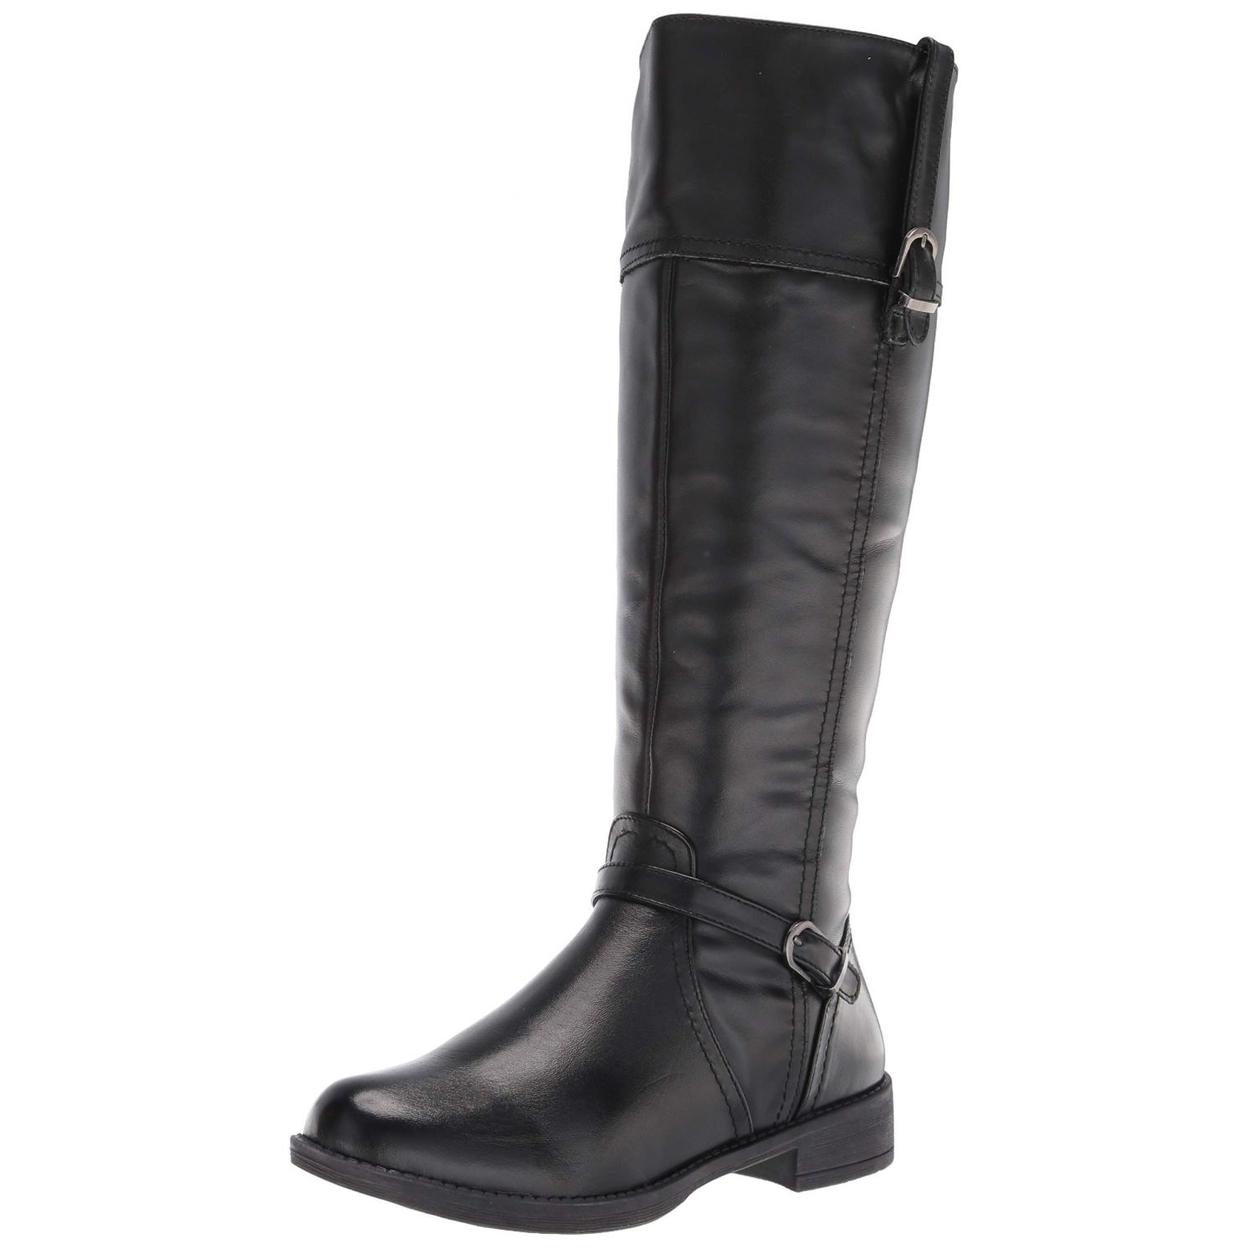 Propet Womens Tasha Zippered Casual Boots Knee High Low Heel 1-2 - Black BROWN - BROWN, 6.5 Wide